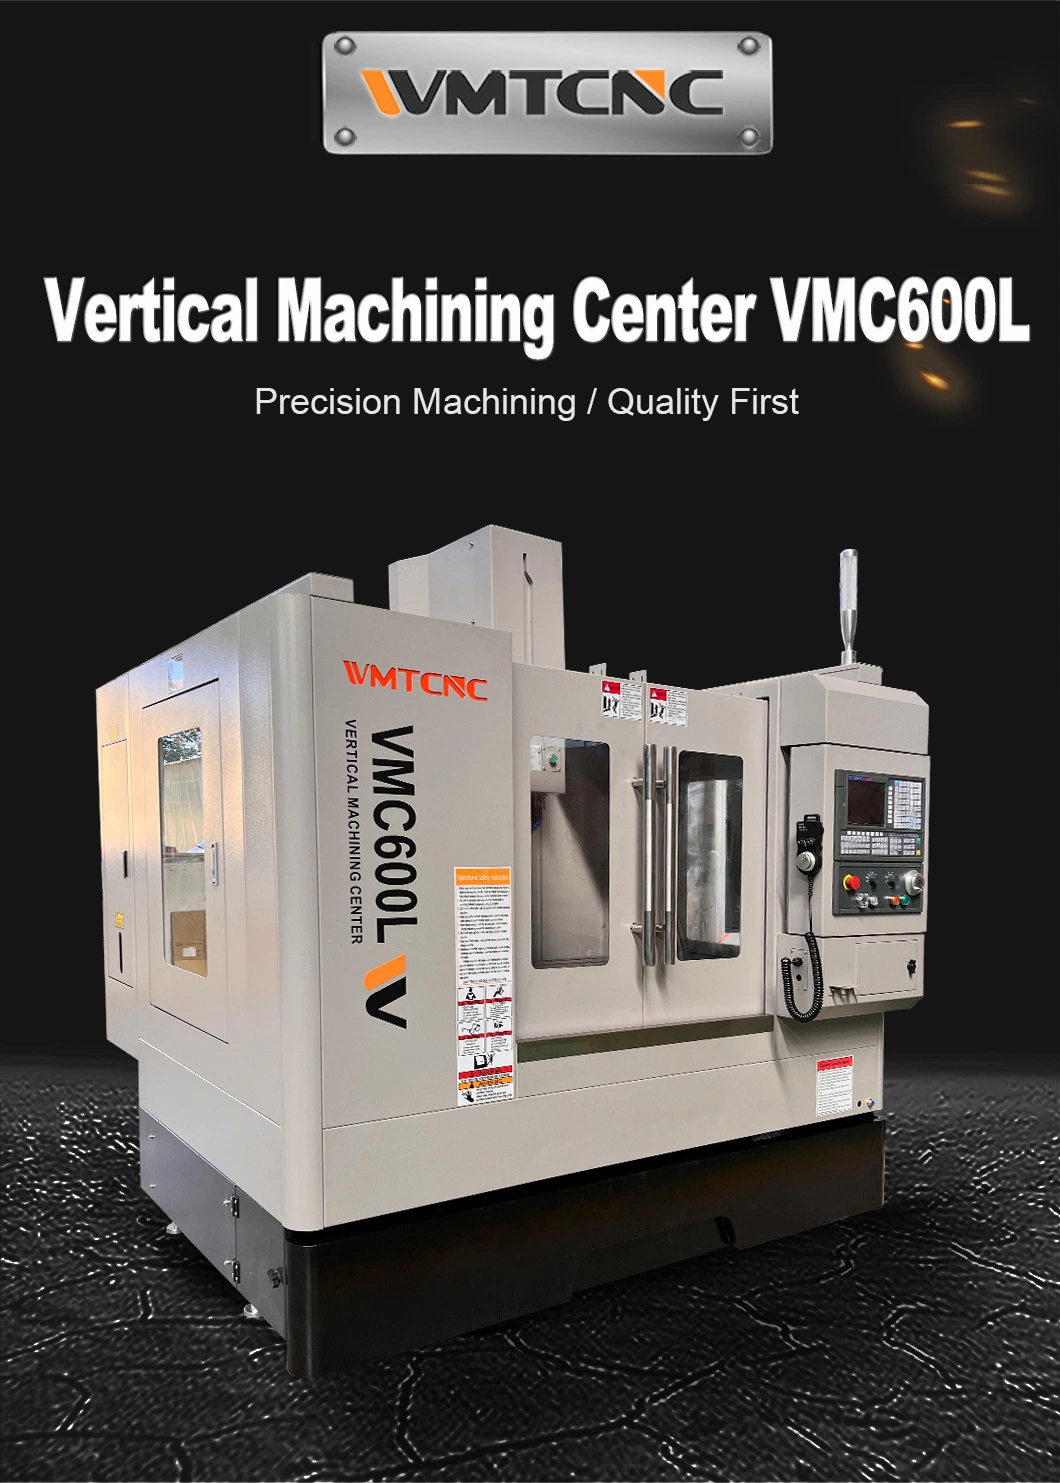 WMTCNC 4 Axis 5 Axis Vertical Milling Machine VMC600L CNC Machining Center Price